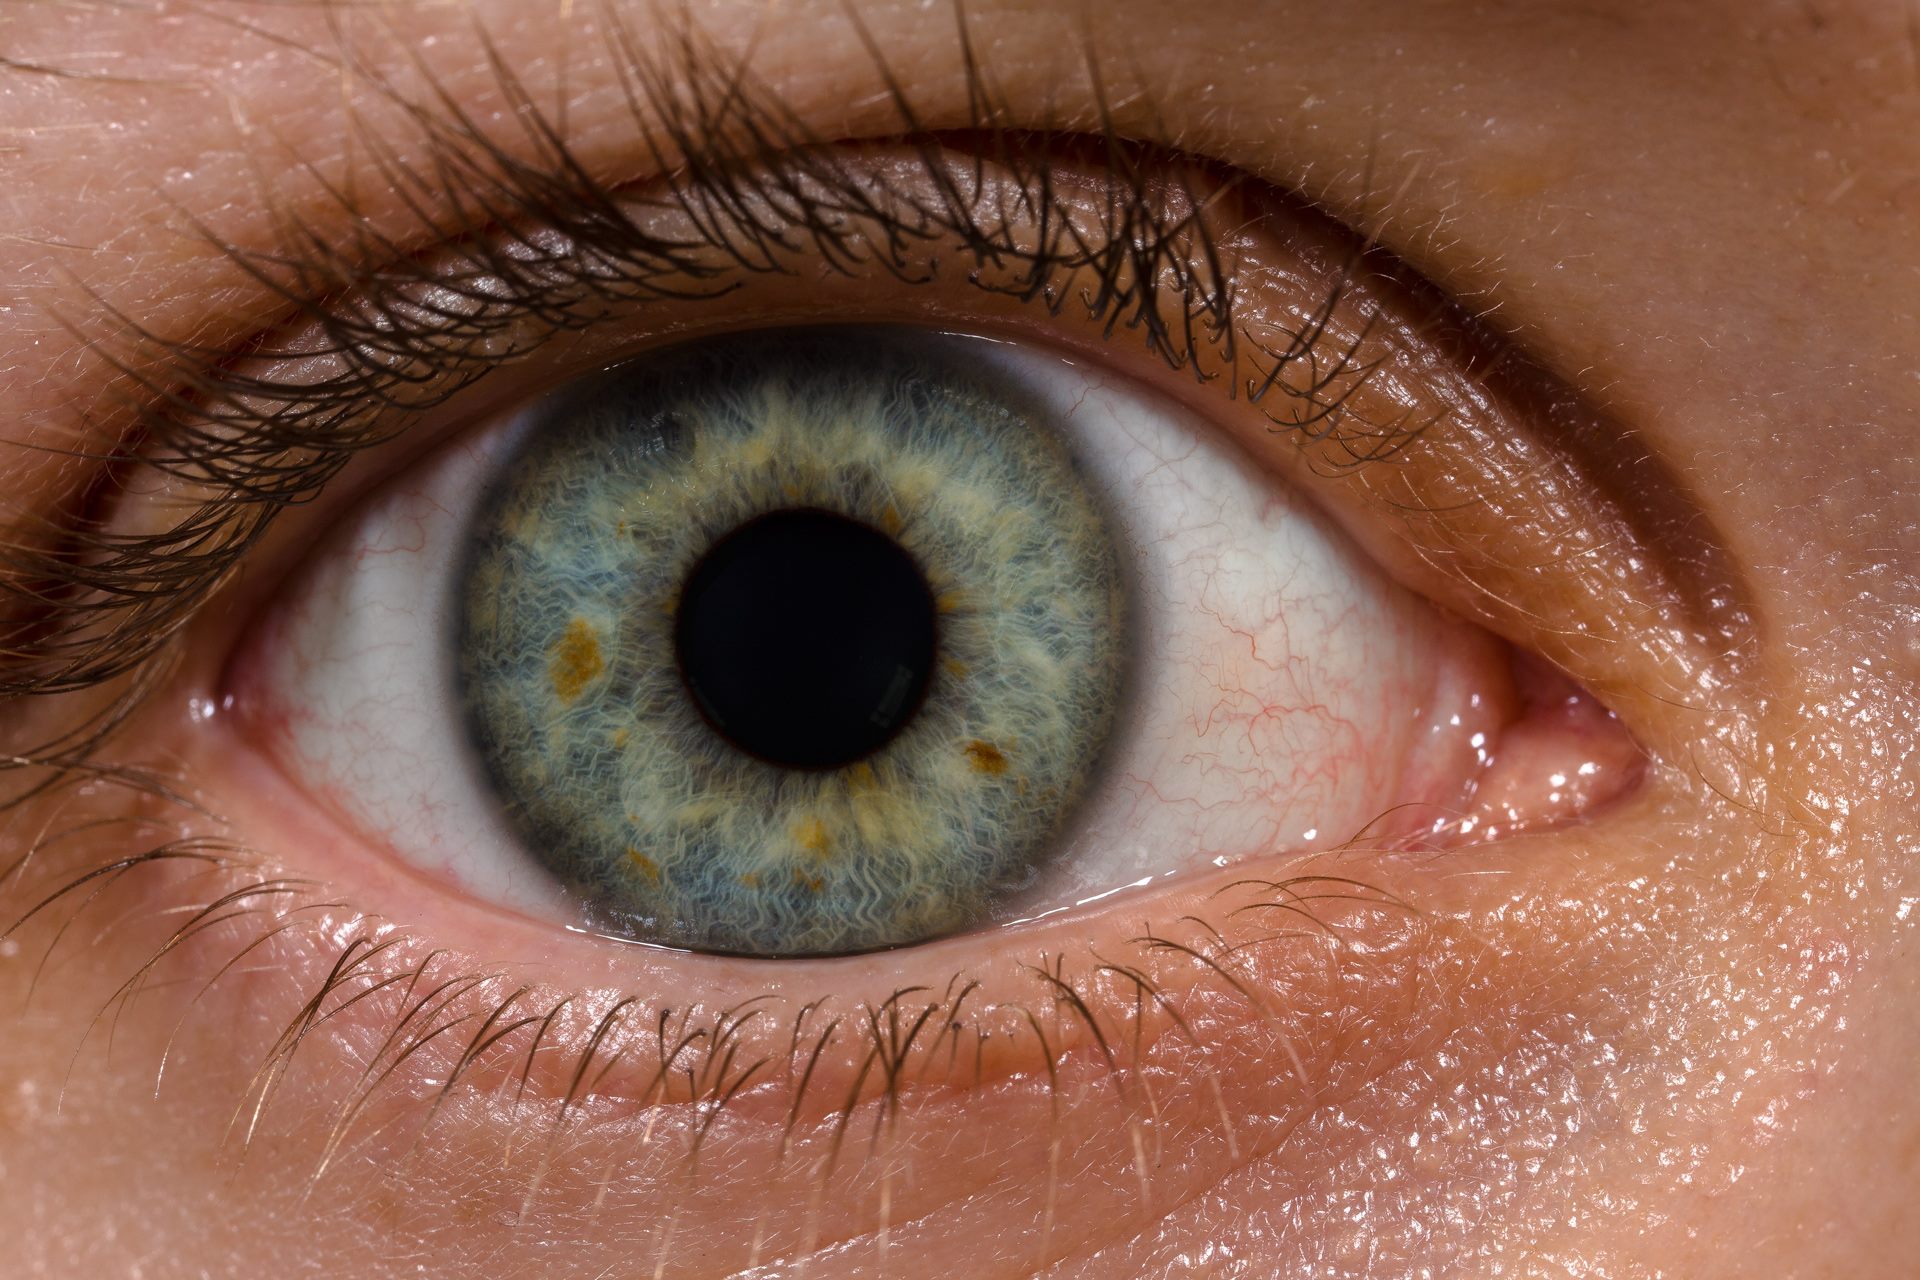 File:Human eye with blood vessels.jpg - Wikimedia Commons